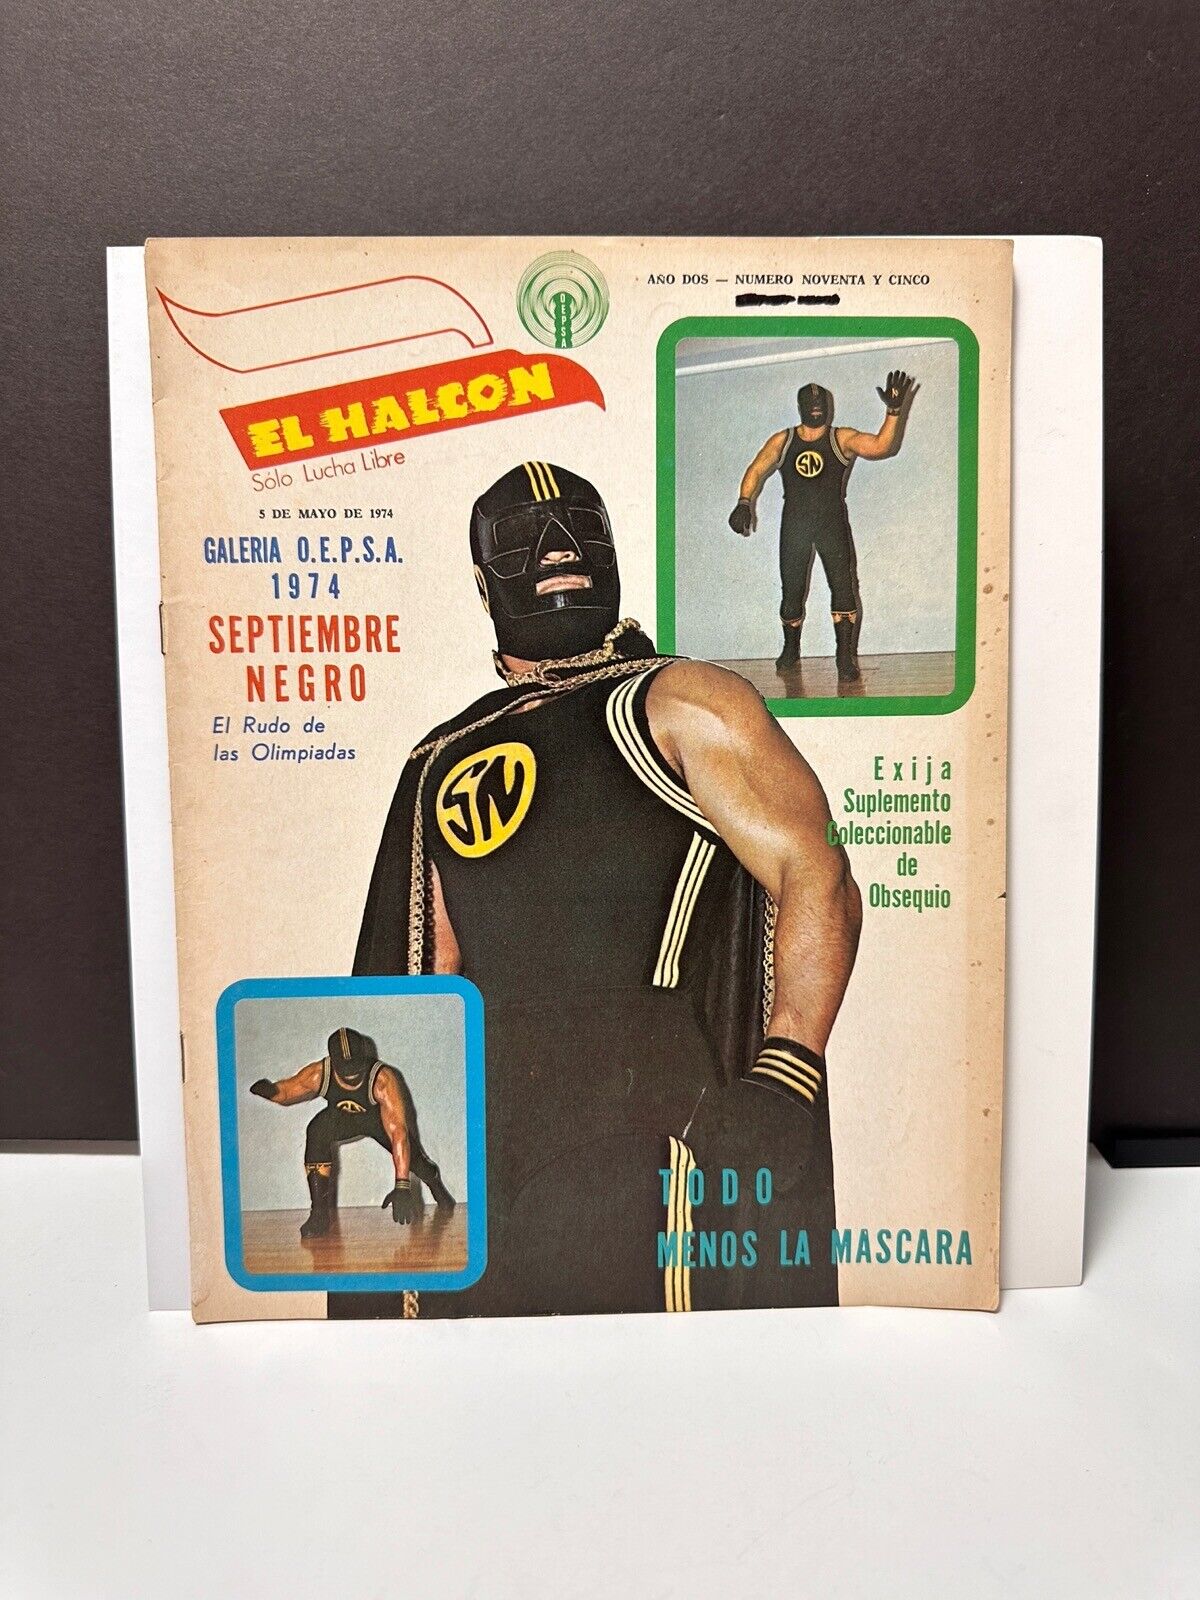 El Halcon #95 MACC DIVISION Vintage Wrestling Magazine (1974) Septiembre Negro